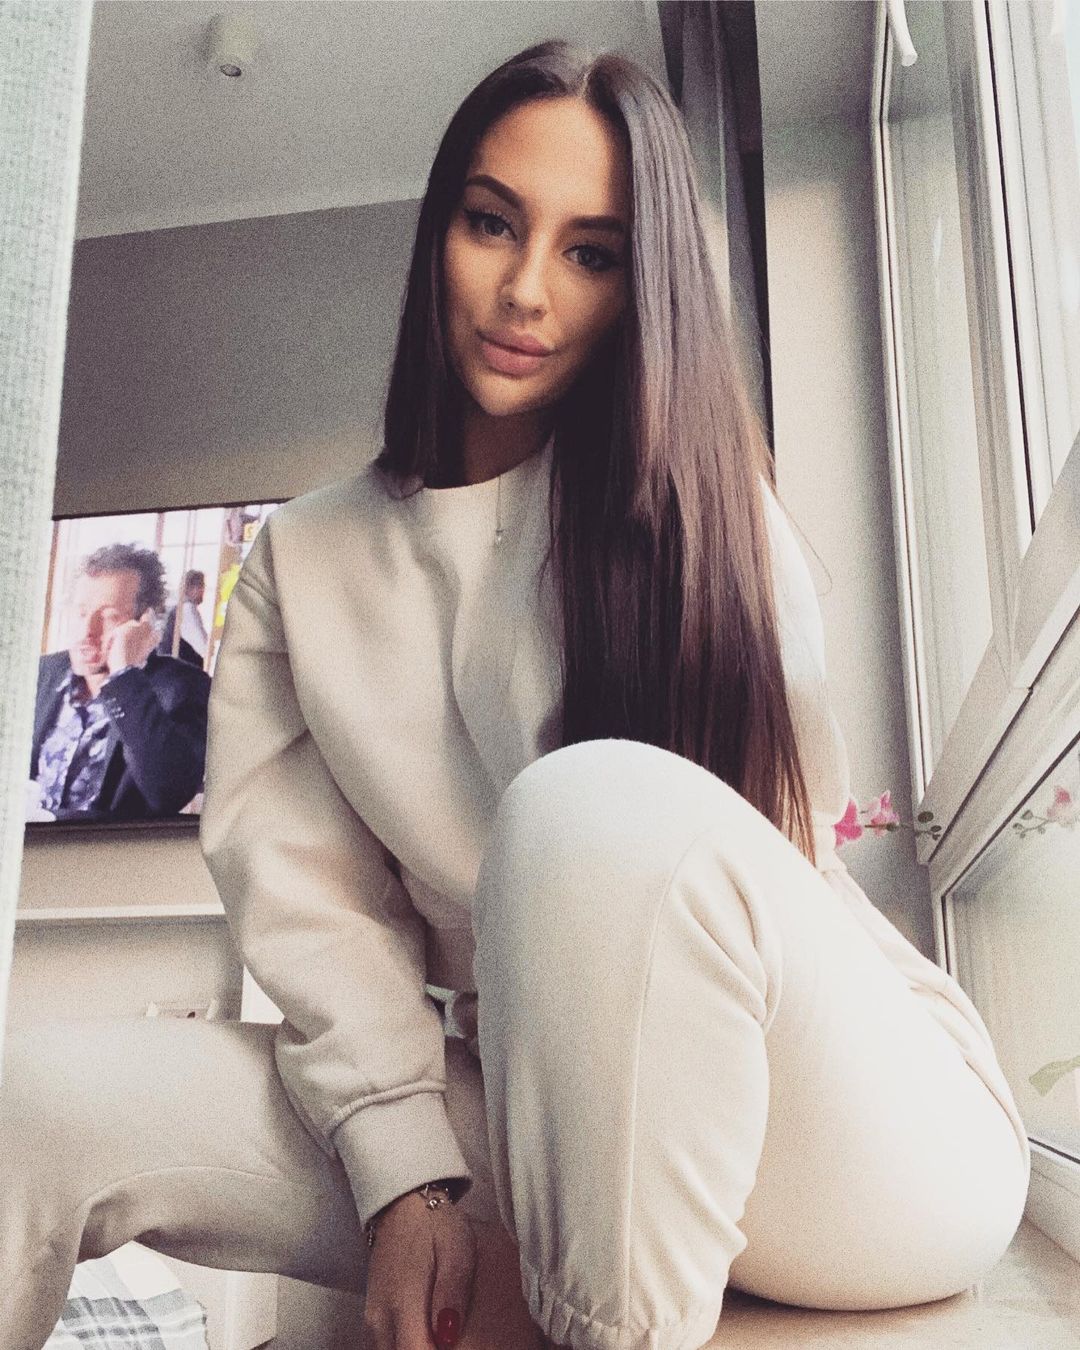 Magdalena jodajtis 24 hottest pics, magdalena jodajtis 24 instagram